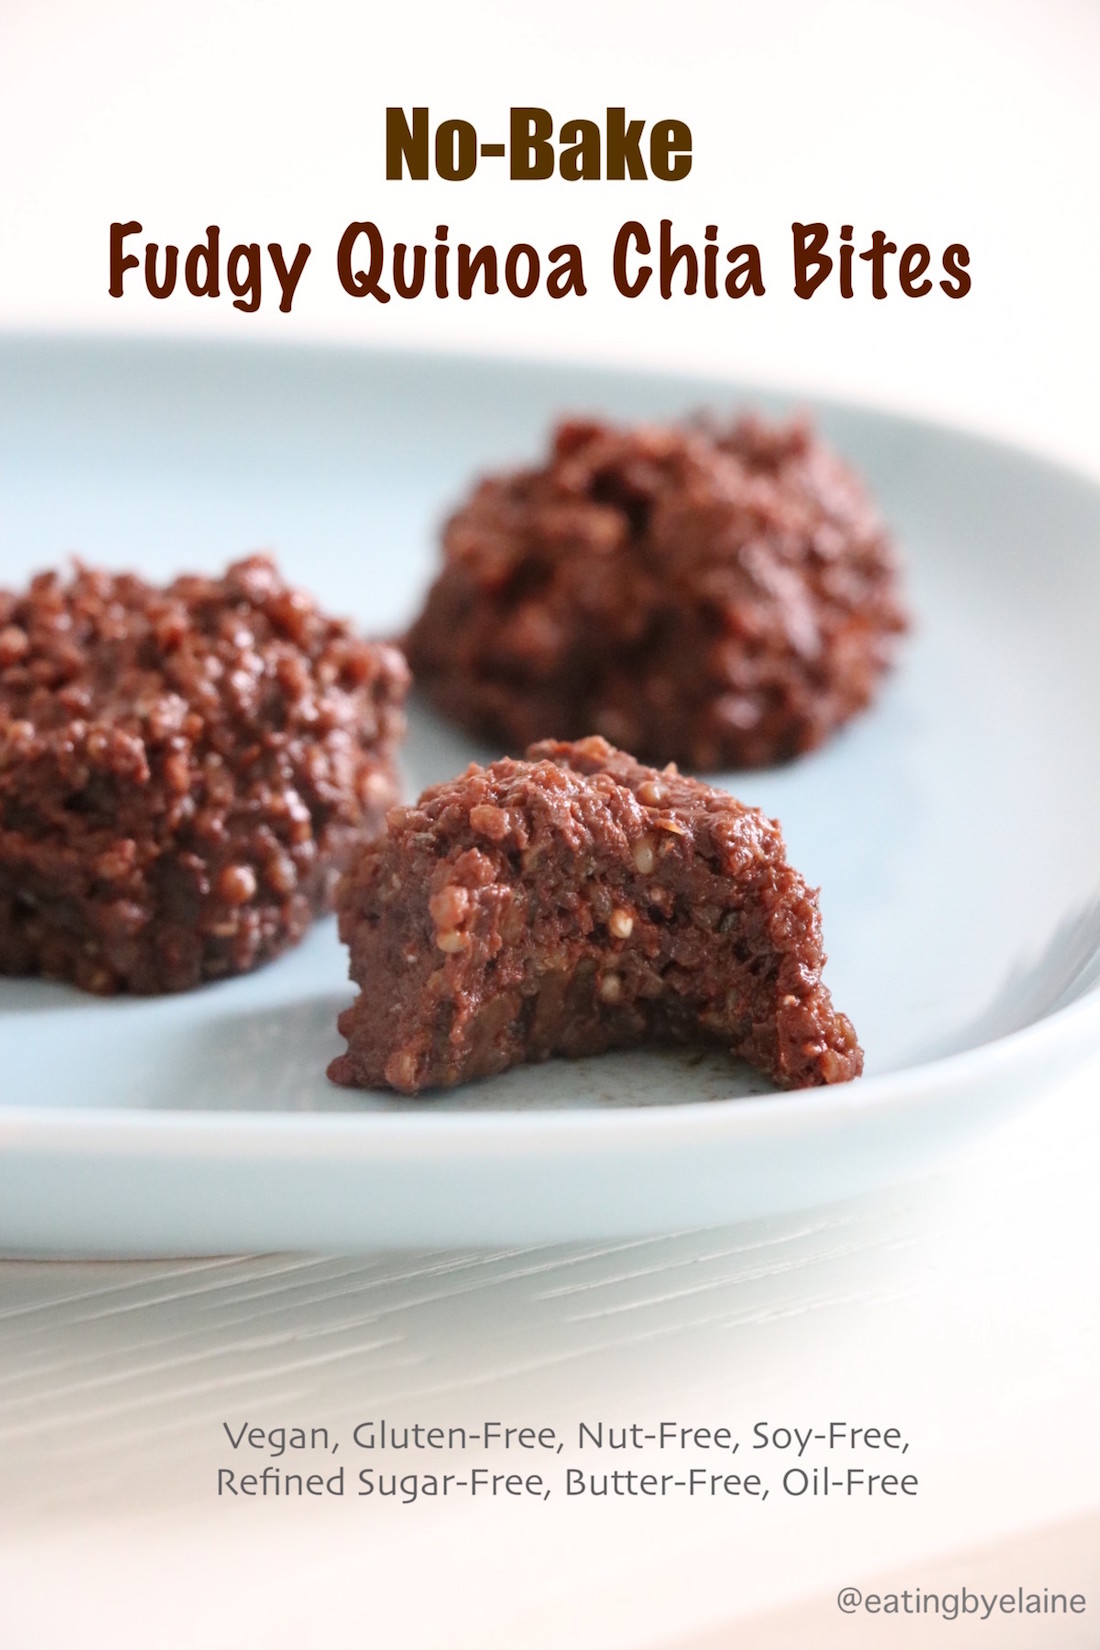 Healthy Chia Seed Recipes - Fudgy Quinoa Chia Bites